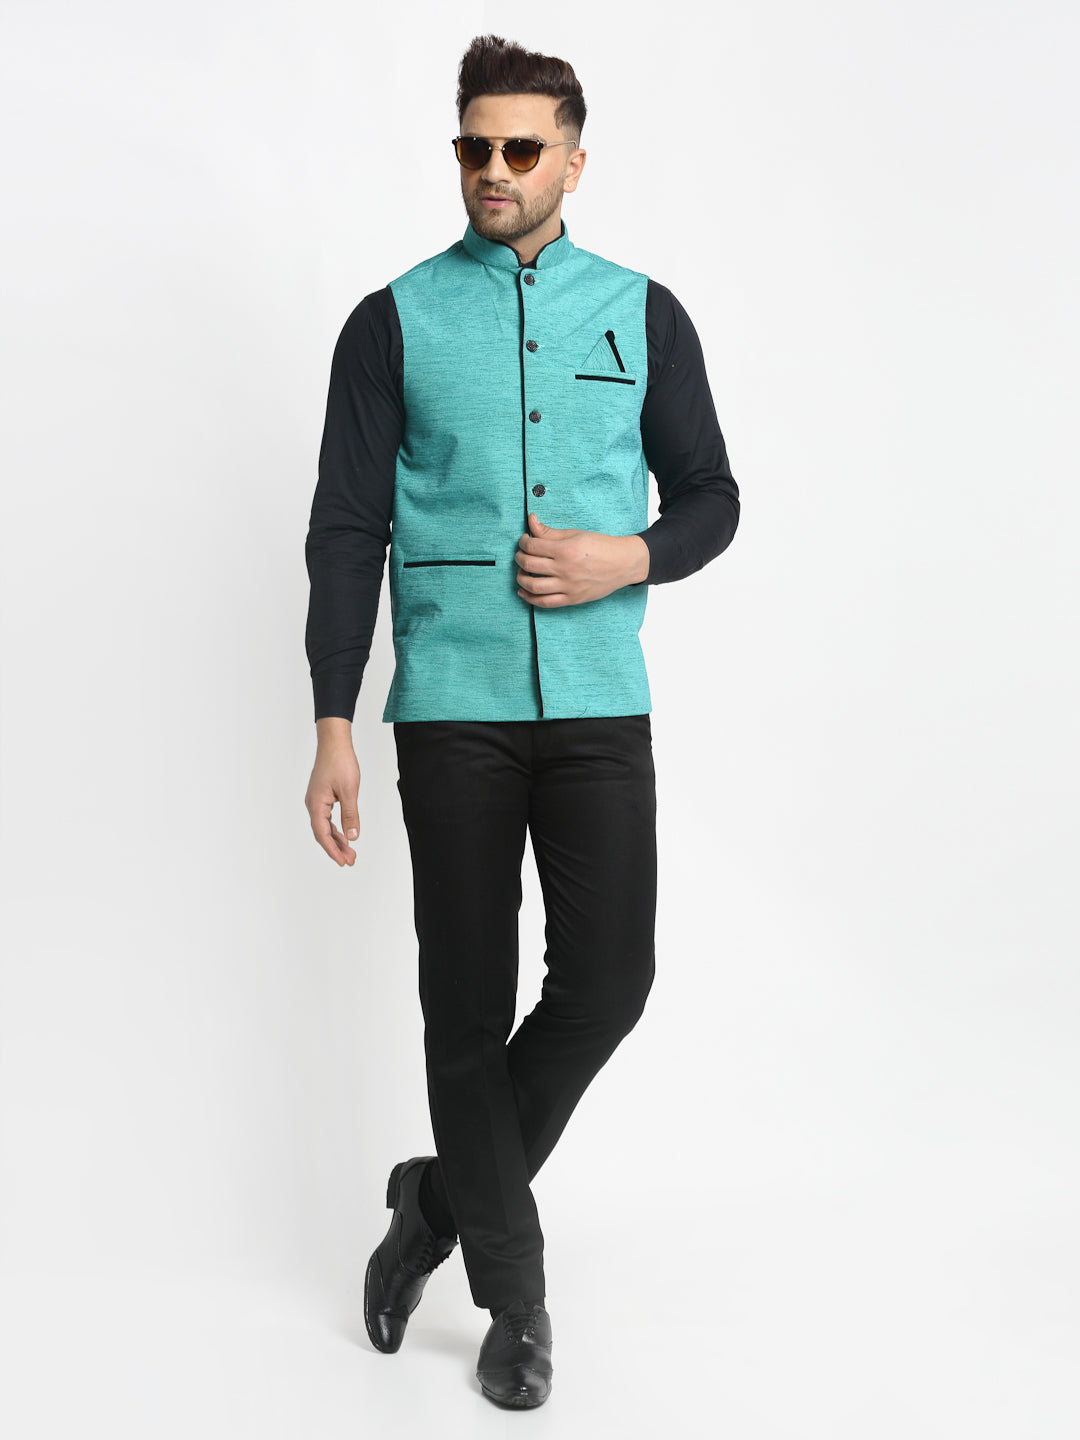 Jompers Men's Blue Solid Nehru Jacket with Square Pocket